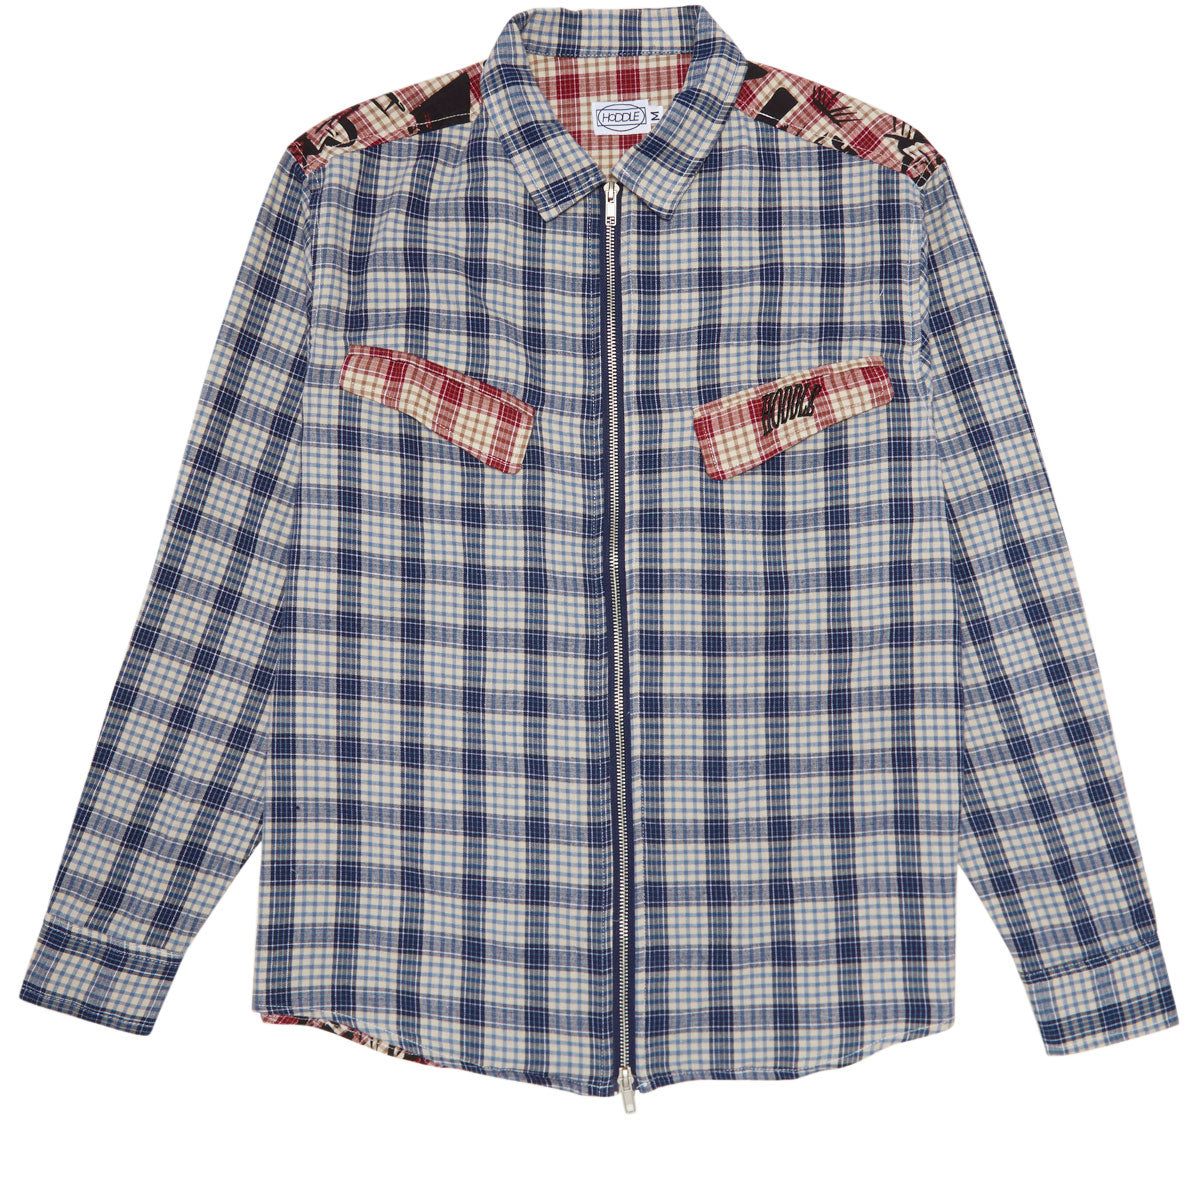 Hoddle Skyline Zip Up Flannel Shirt - Multi Plaid image 1